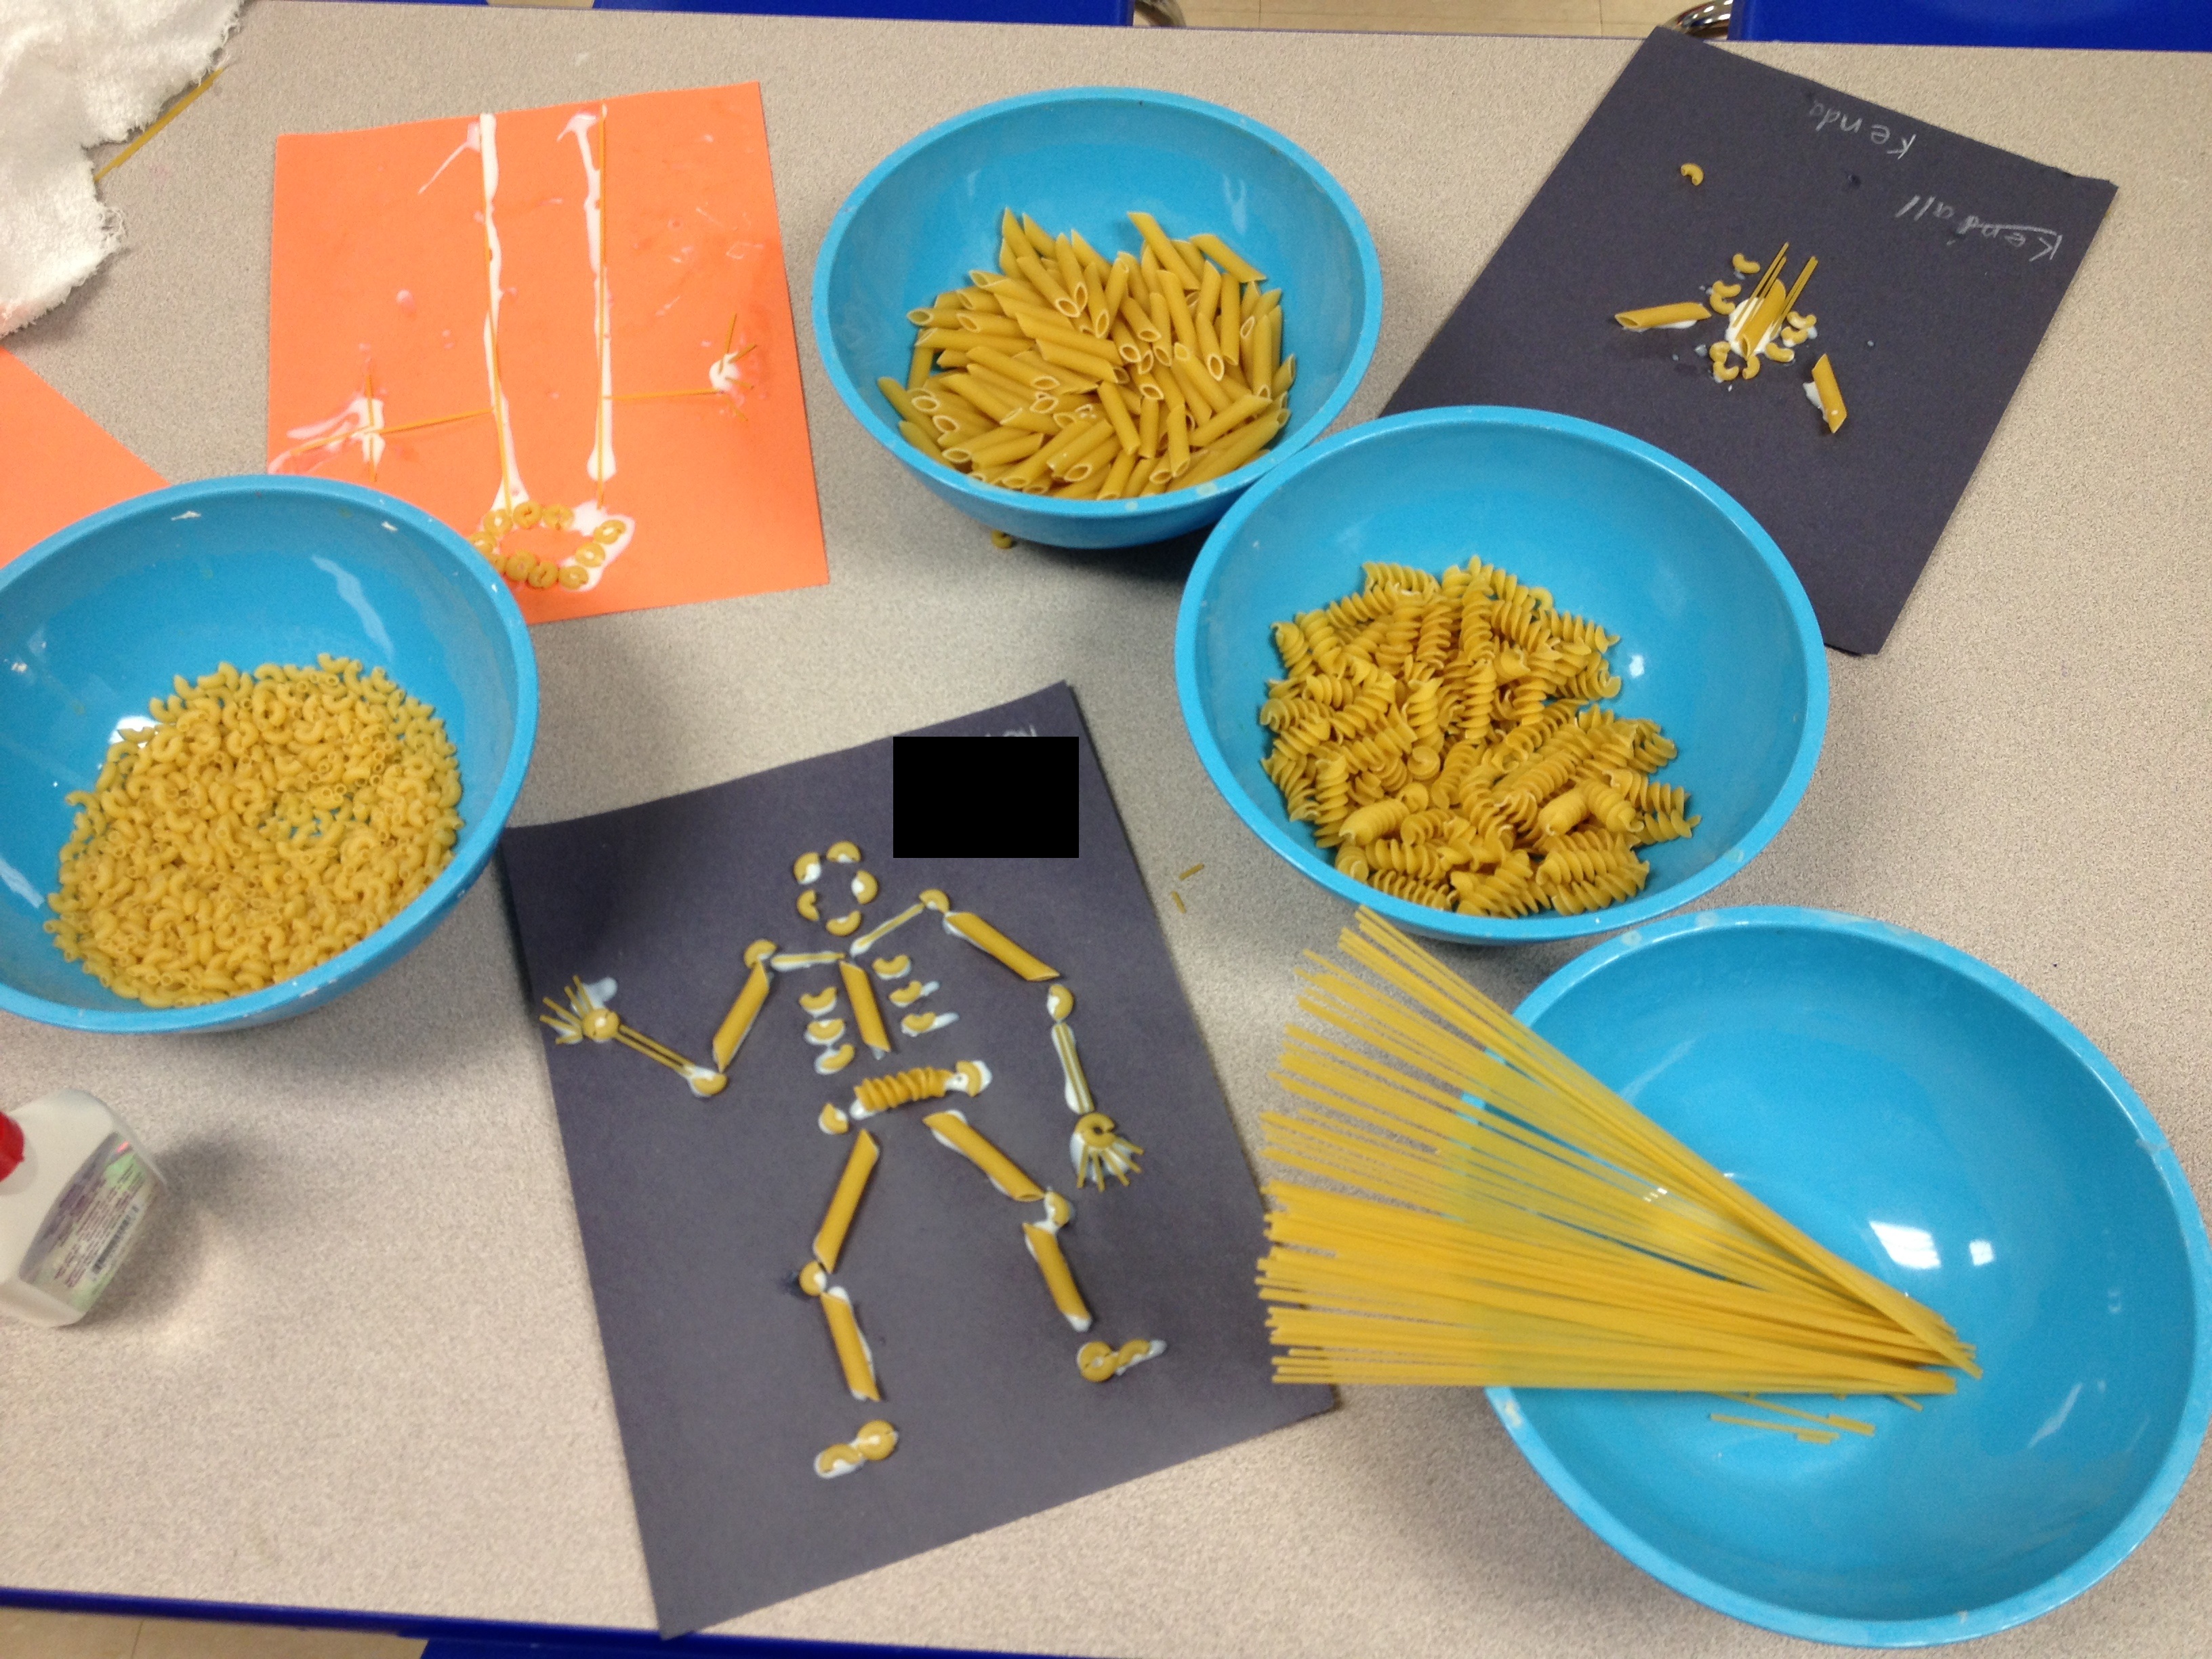 bowls of pasta and pasta skeleton samples